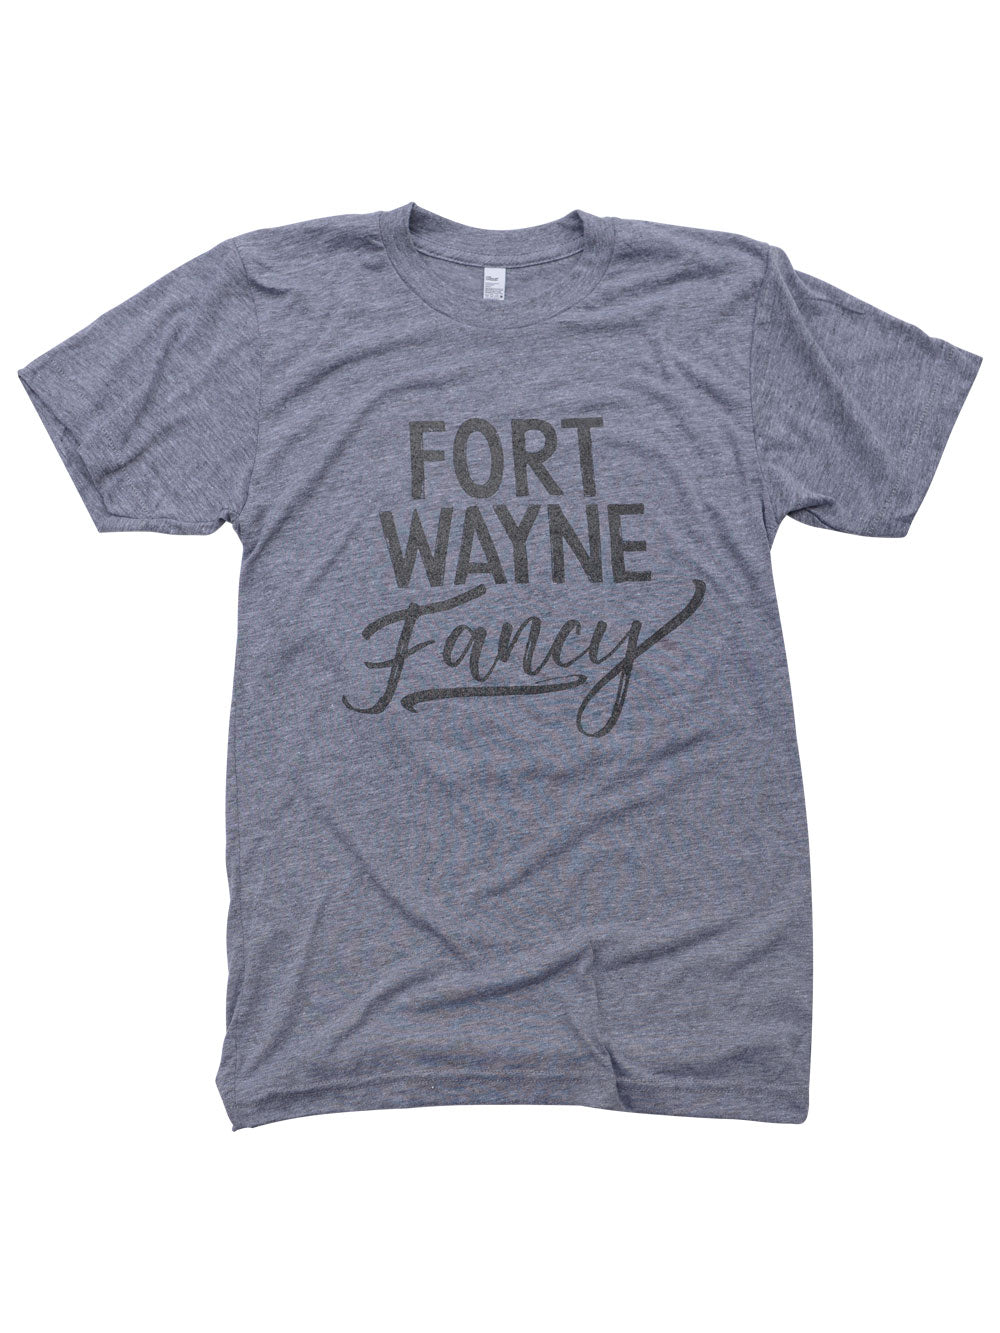 Fort Wayne Fancy gray heather t-shirt